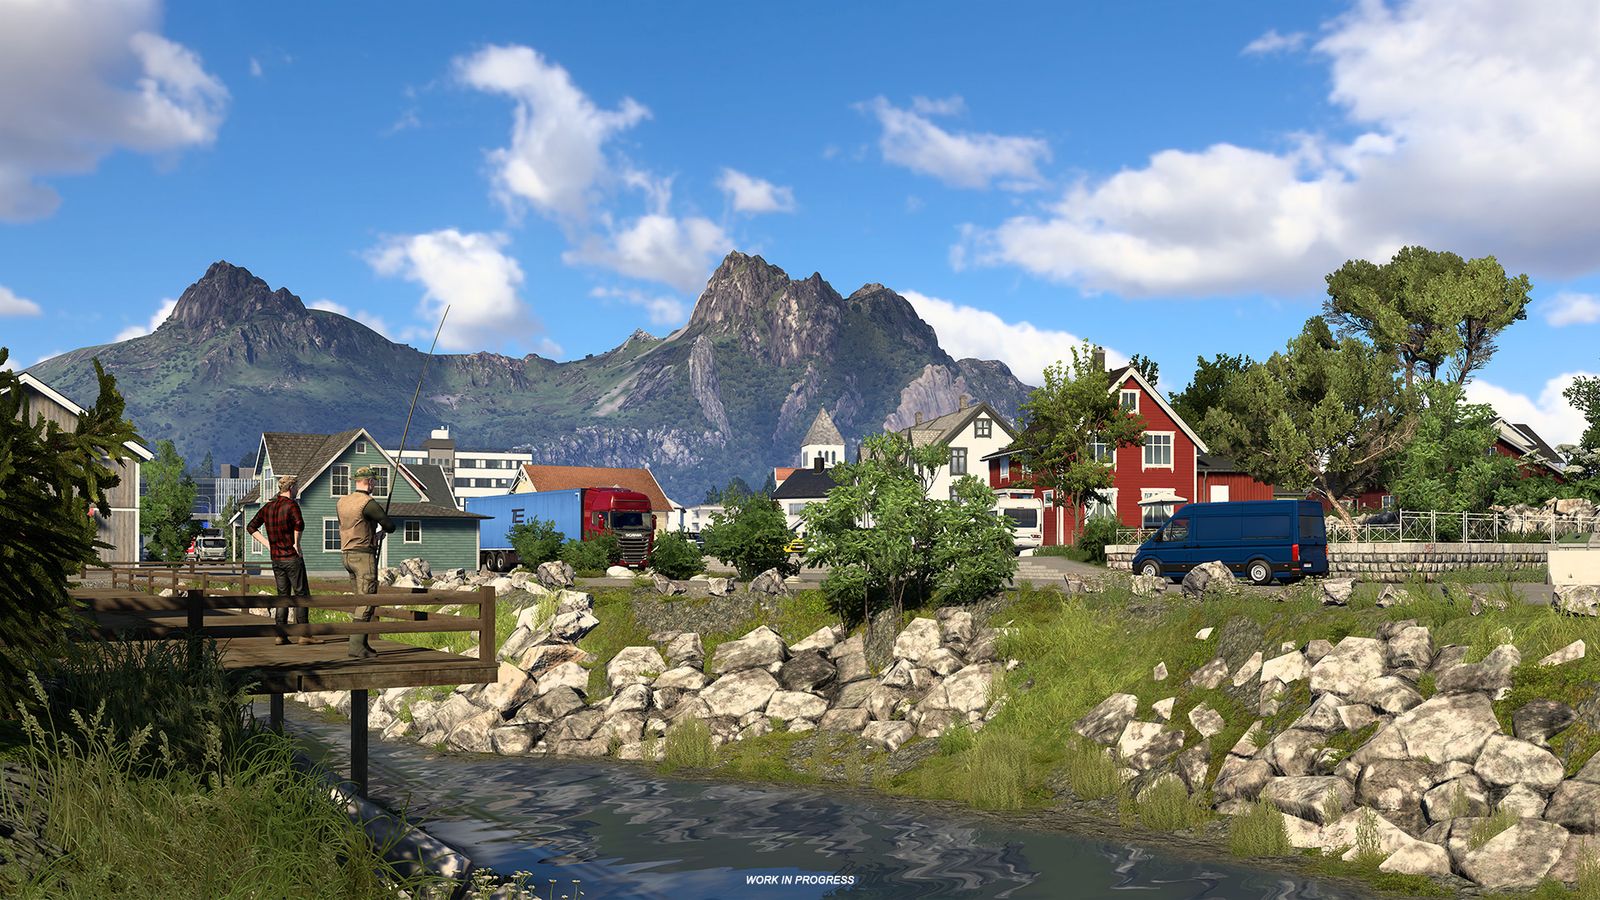 Euro Truck Simulator 2 Nordic Horizons DLC revealed